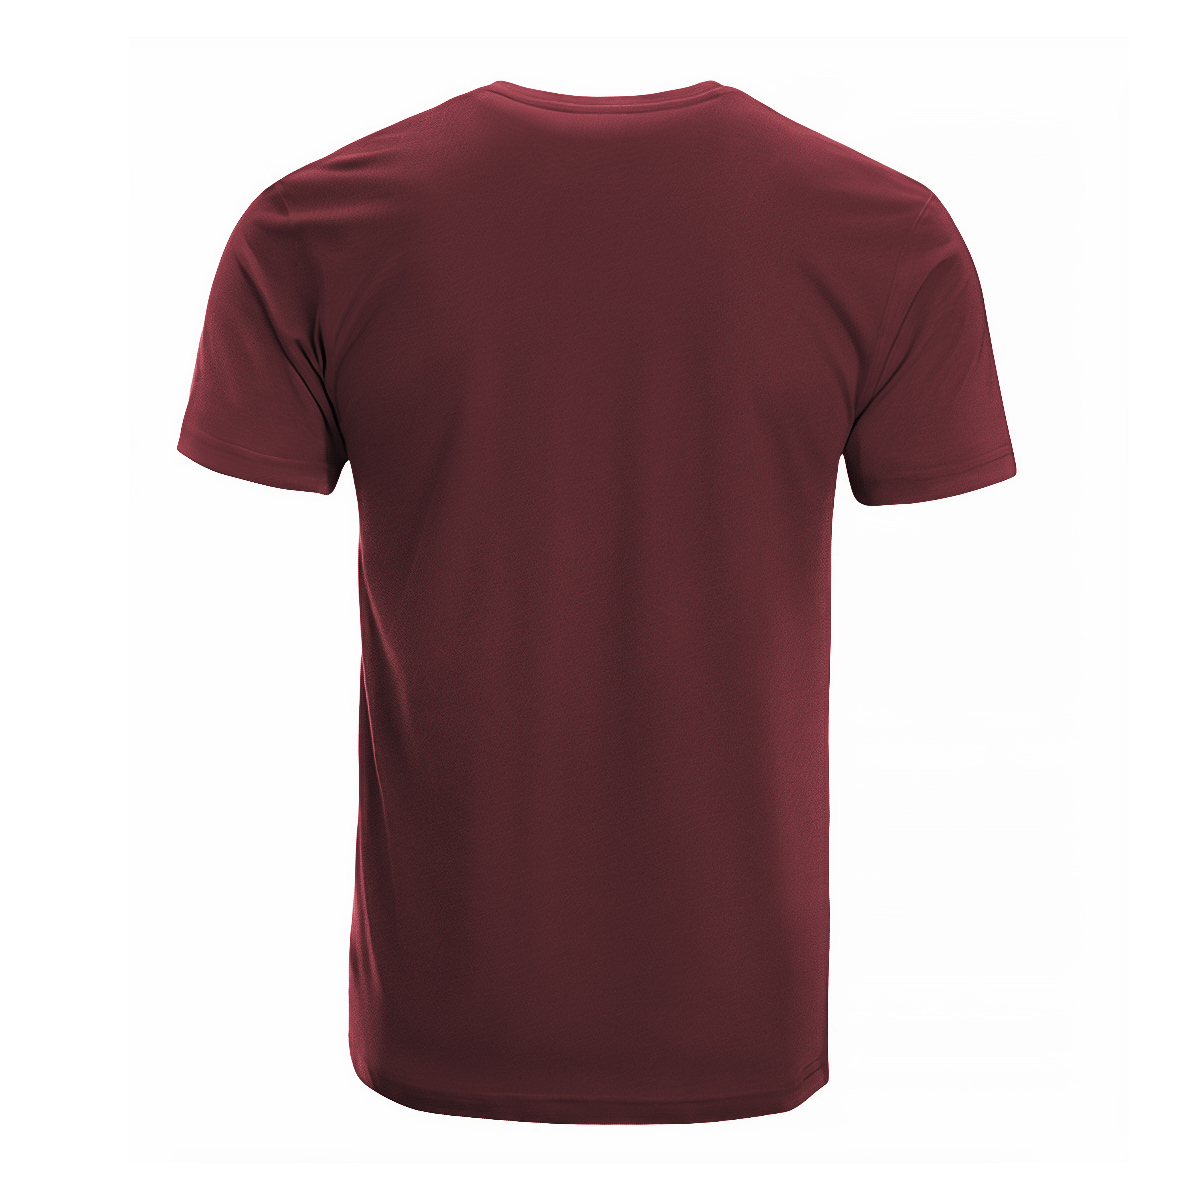 MacCorquodale Tartan Crest T-shirt - I'm not yelling style